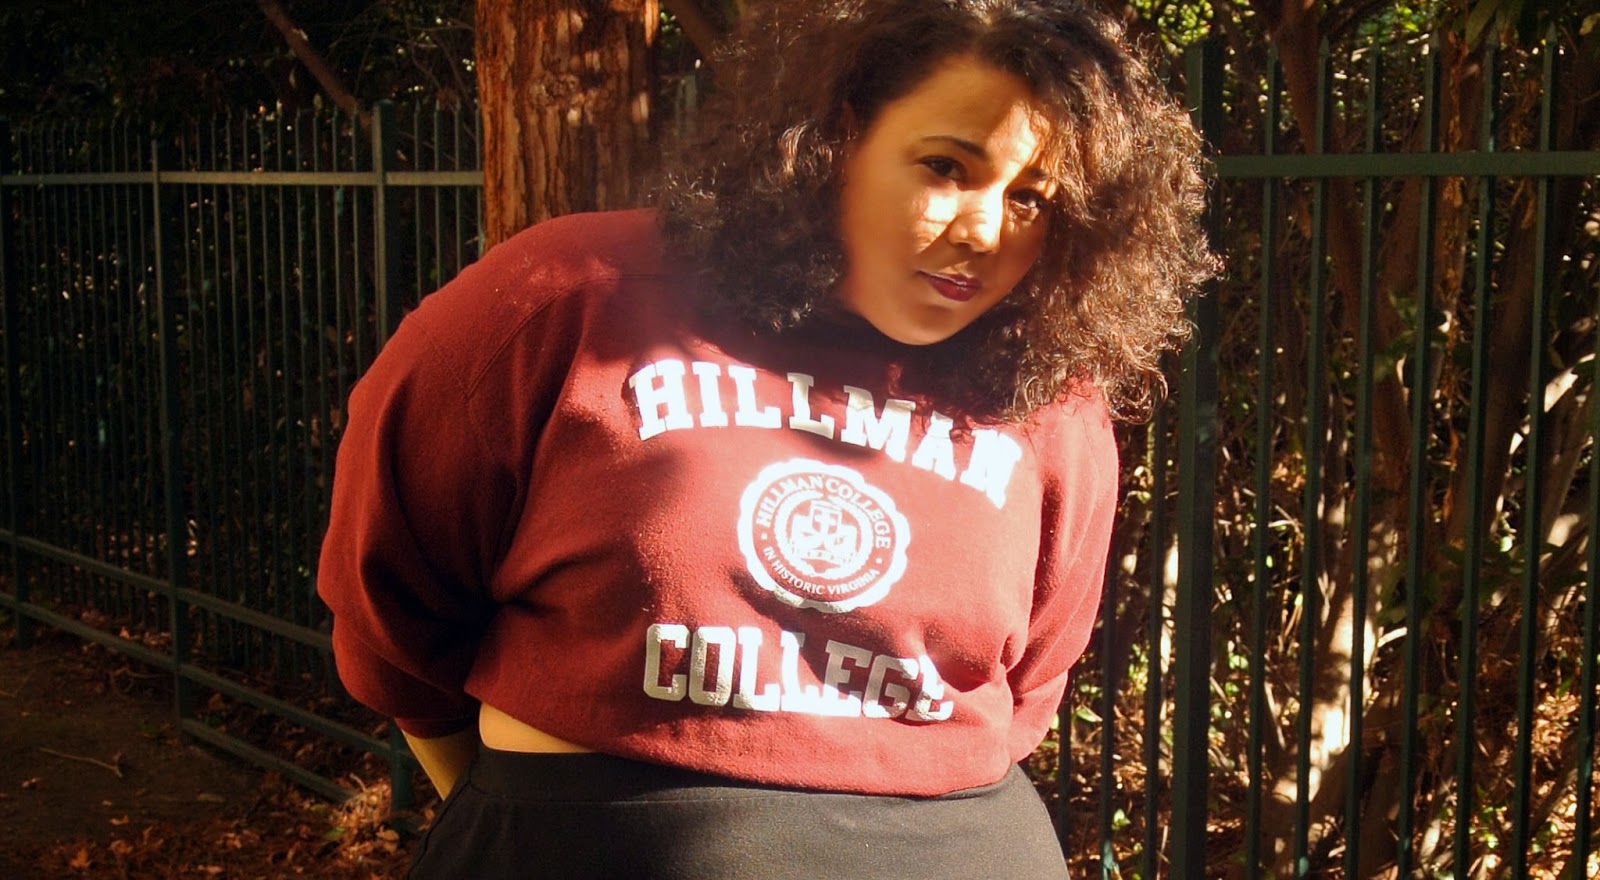 Hillman College Sweatshirt, A Different World, Plus size clothing